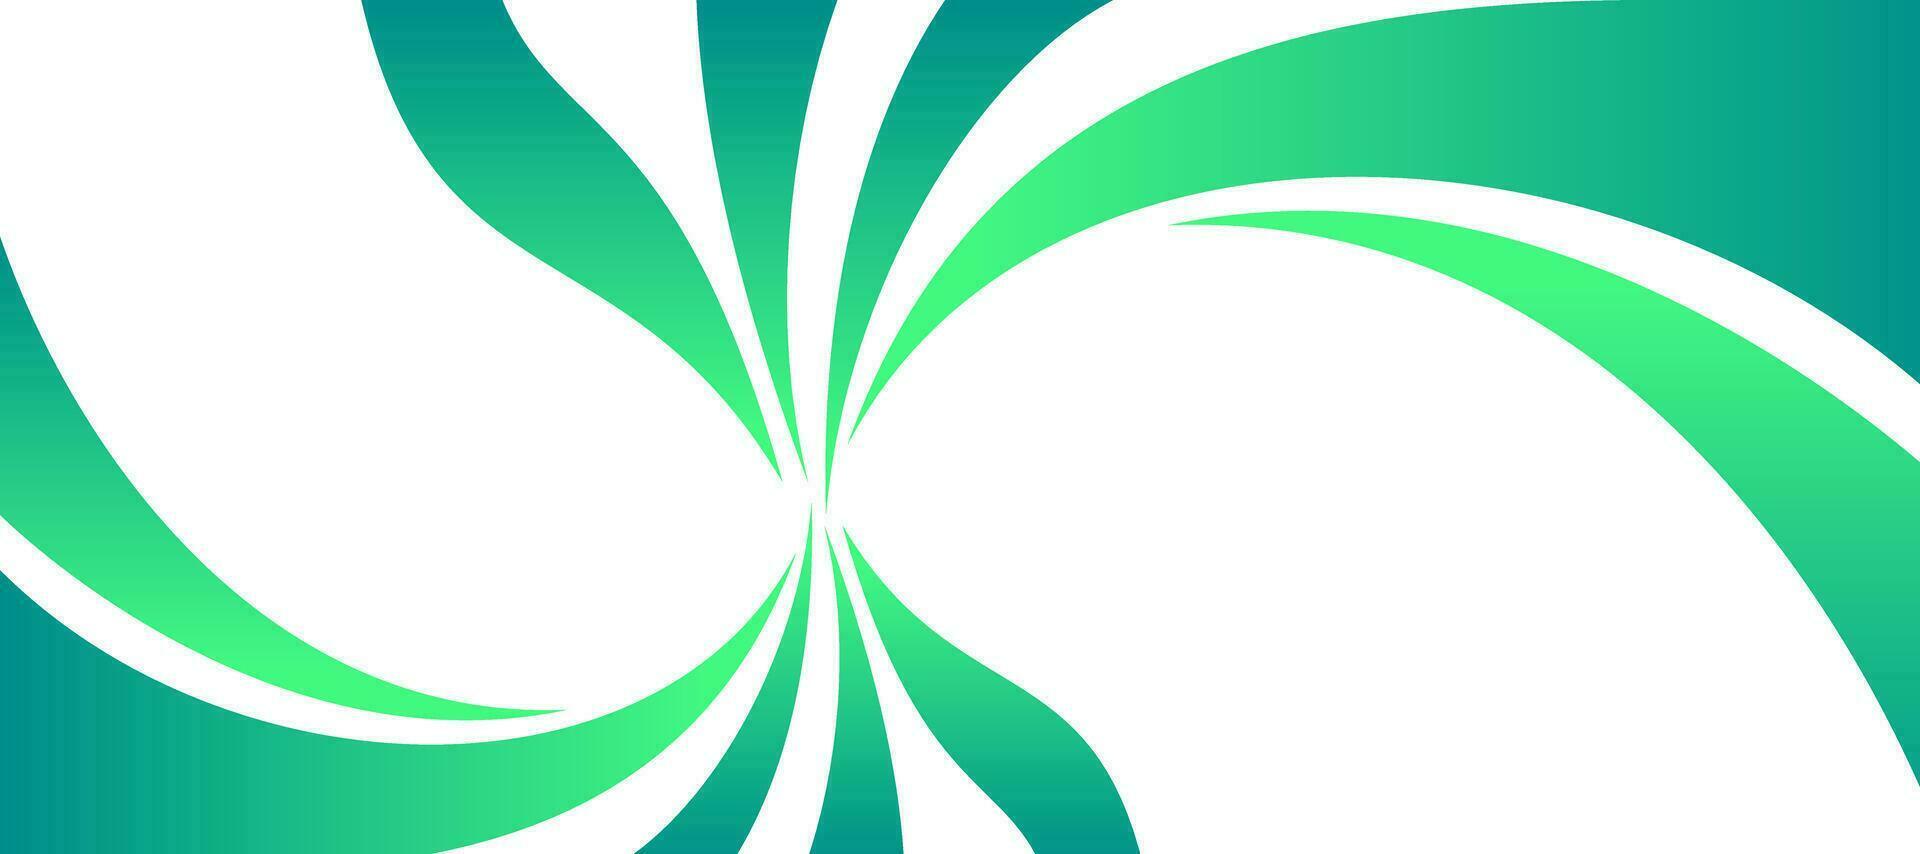 green gradient circular curve waves banner brochure flyer design background vector